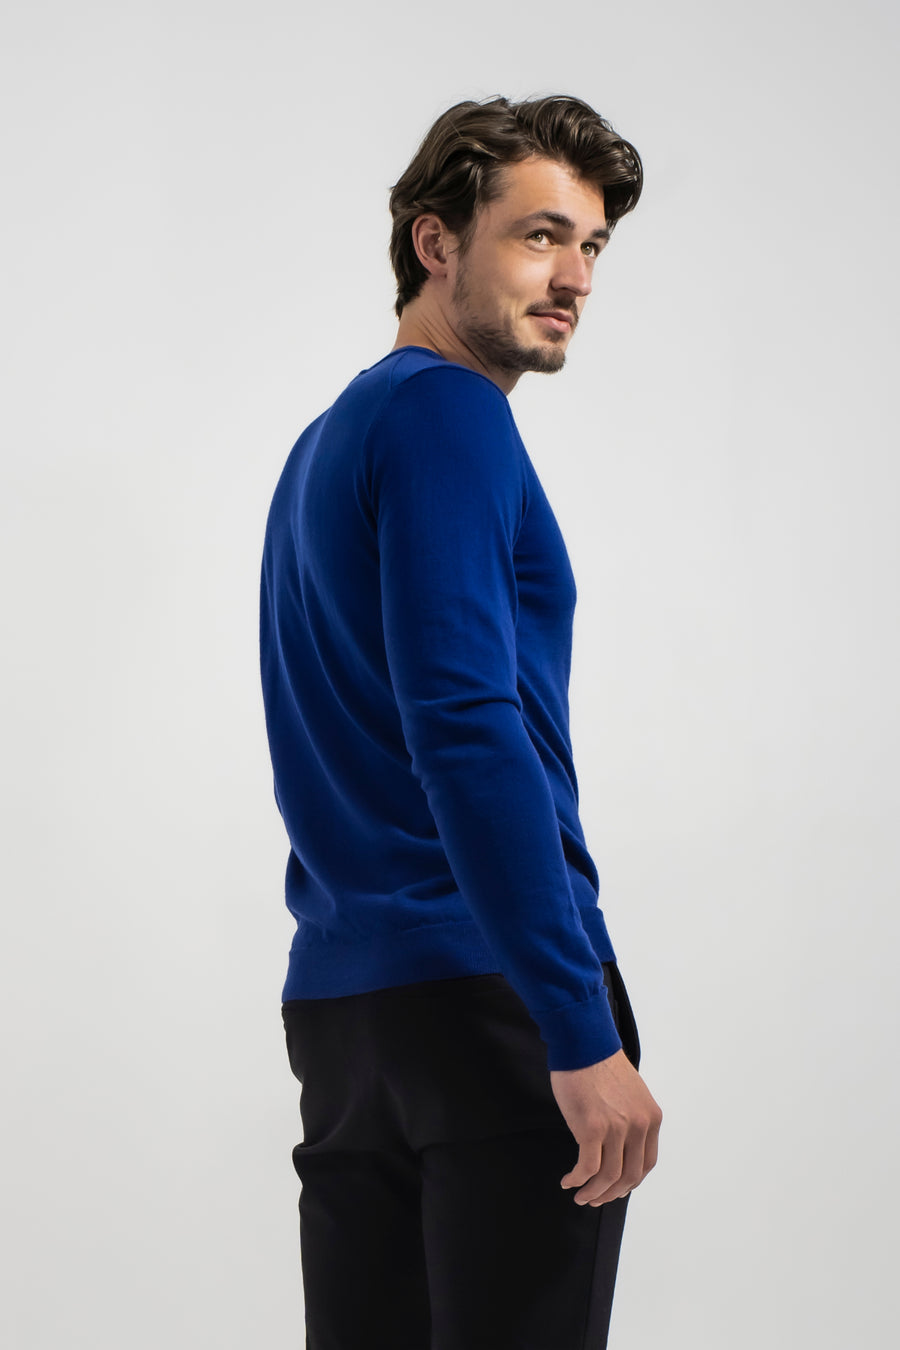 Merino Sweater v2.0